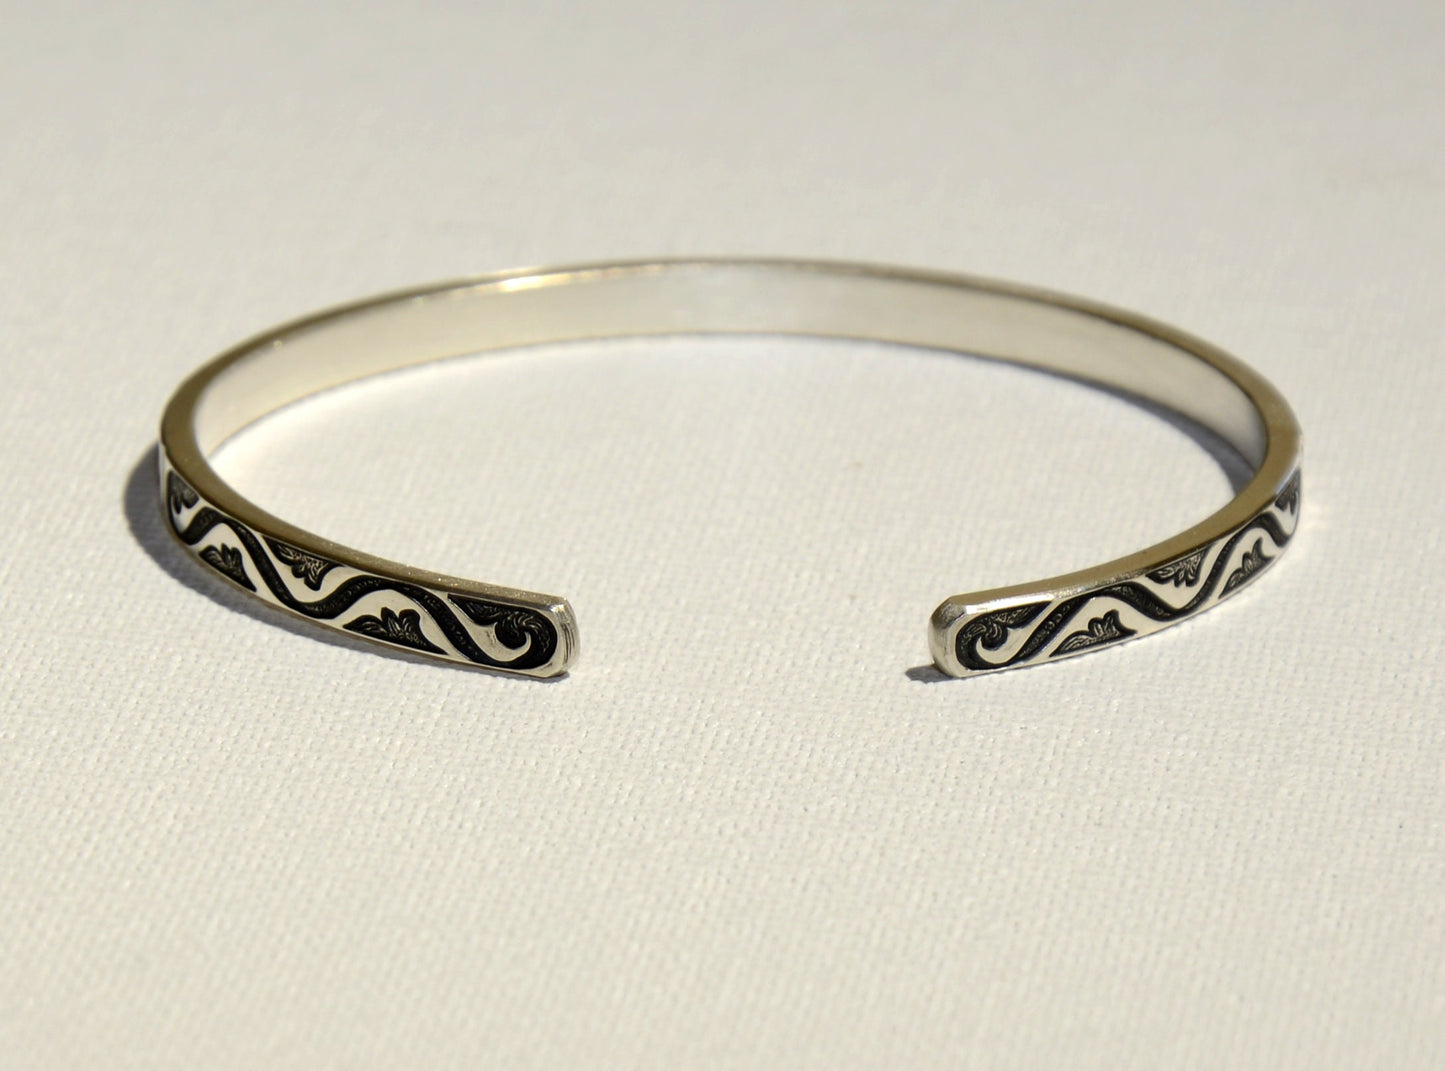 Sterling Silver Bracelet with Art Nouveau Styling